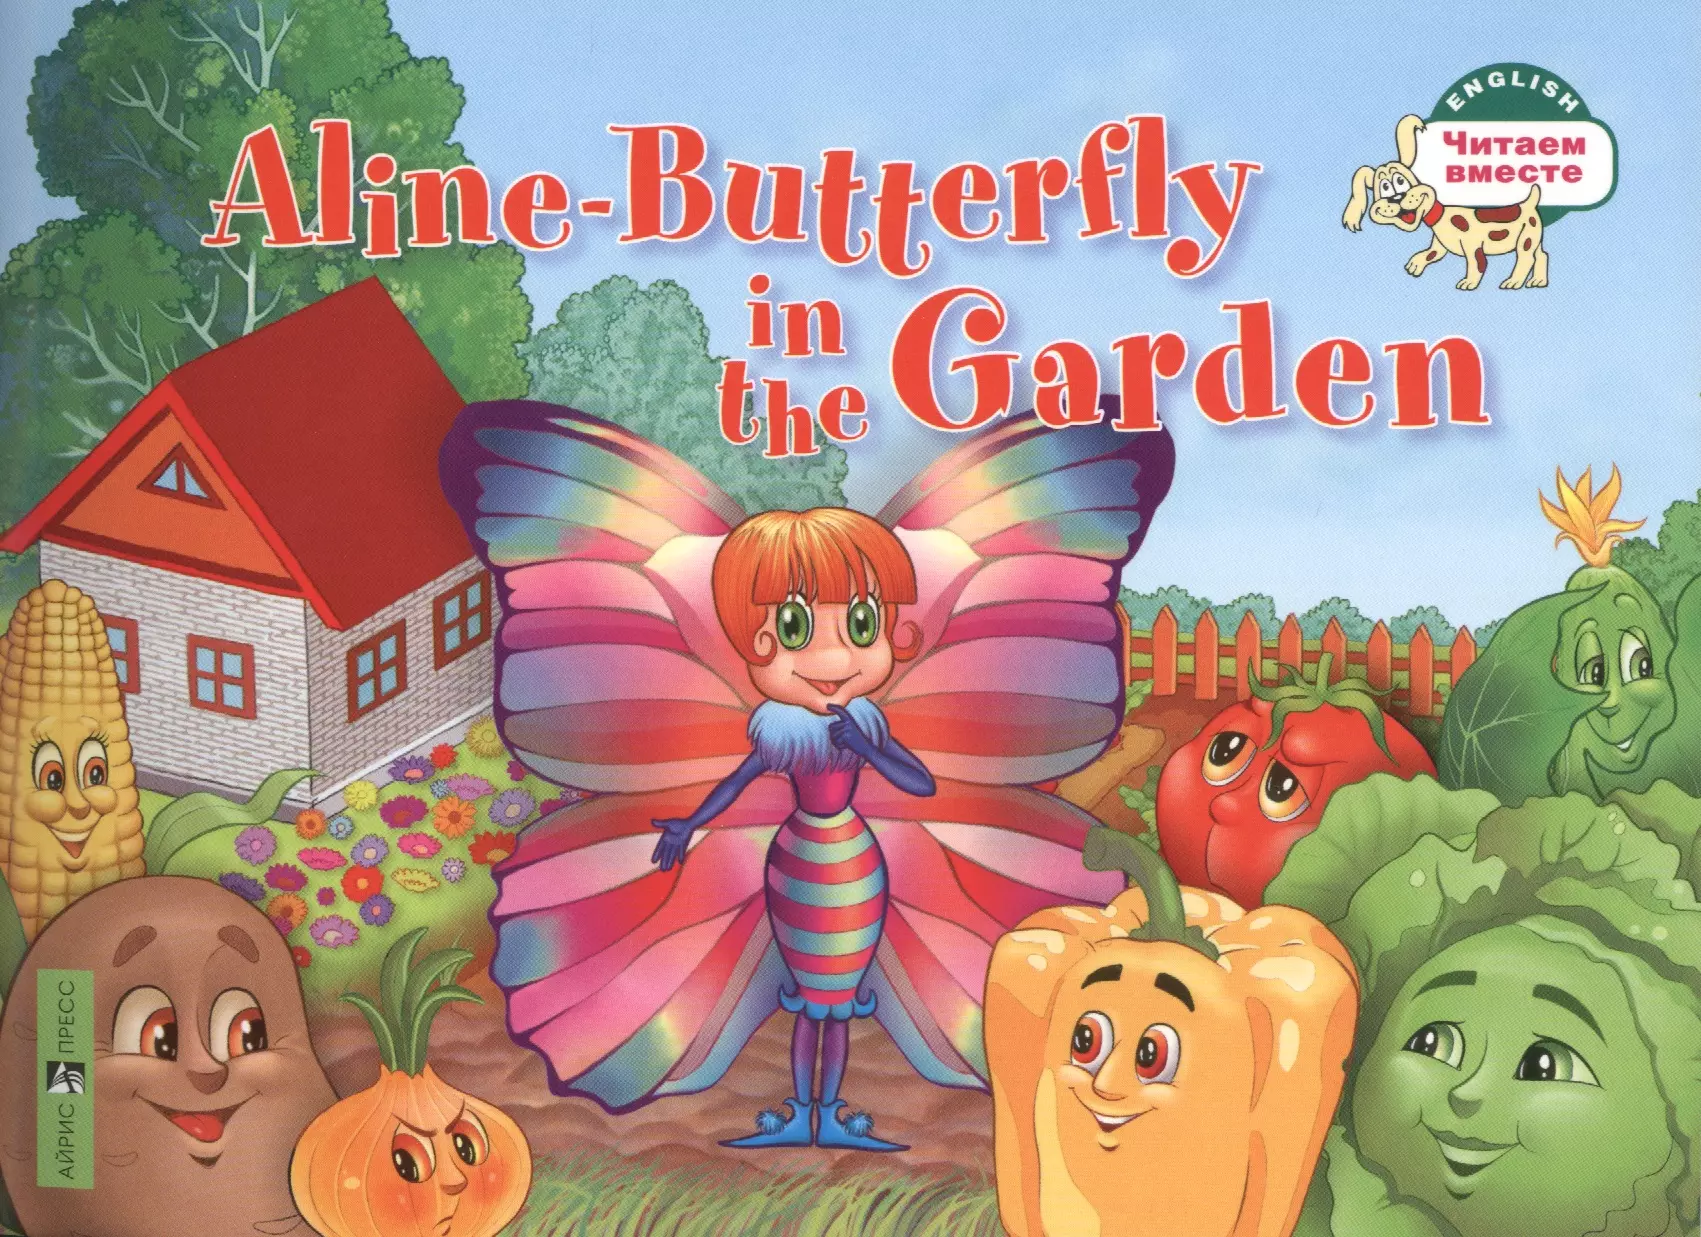 foreign language book бабочка алина в огороде aline butterfly in the garden на английском языке 1 уровень Бабочка Алина в огороде = Aline-Butterfly in the Garden (на английском языке)